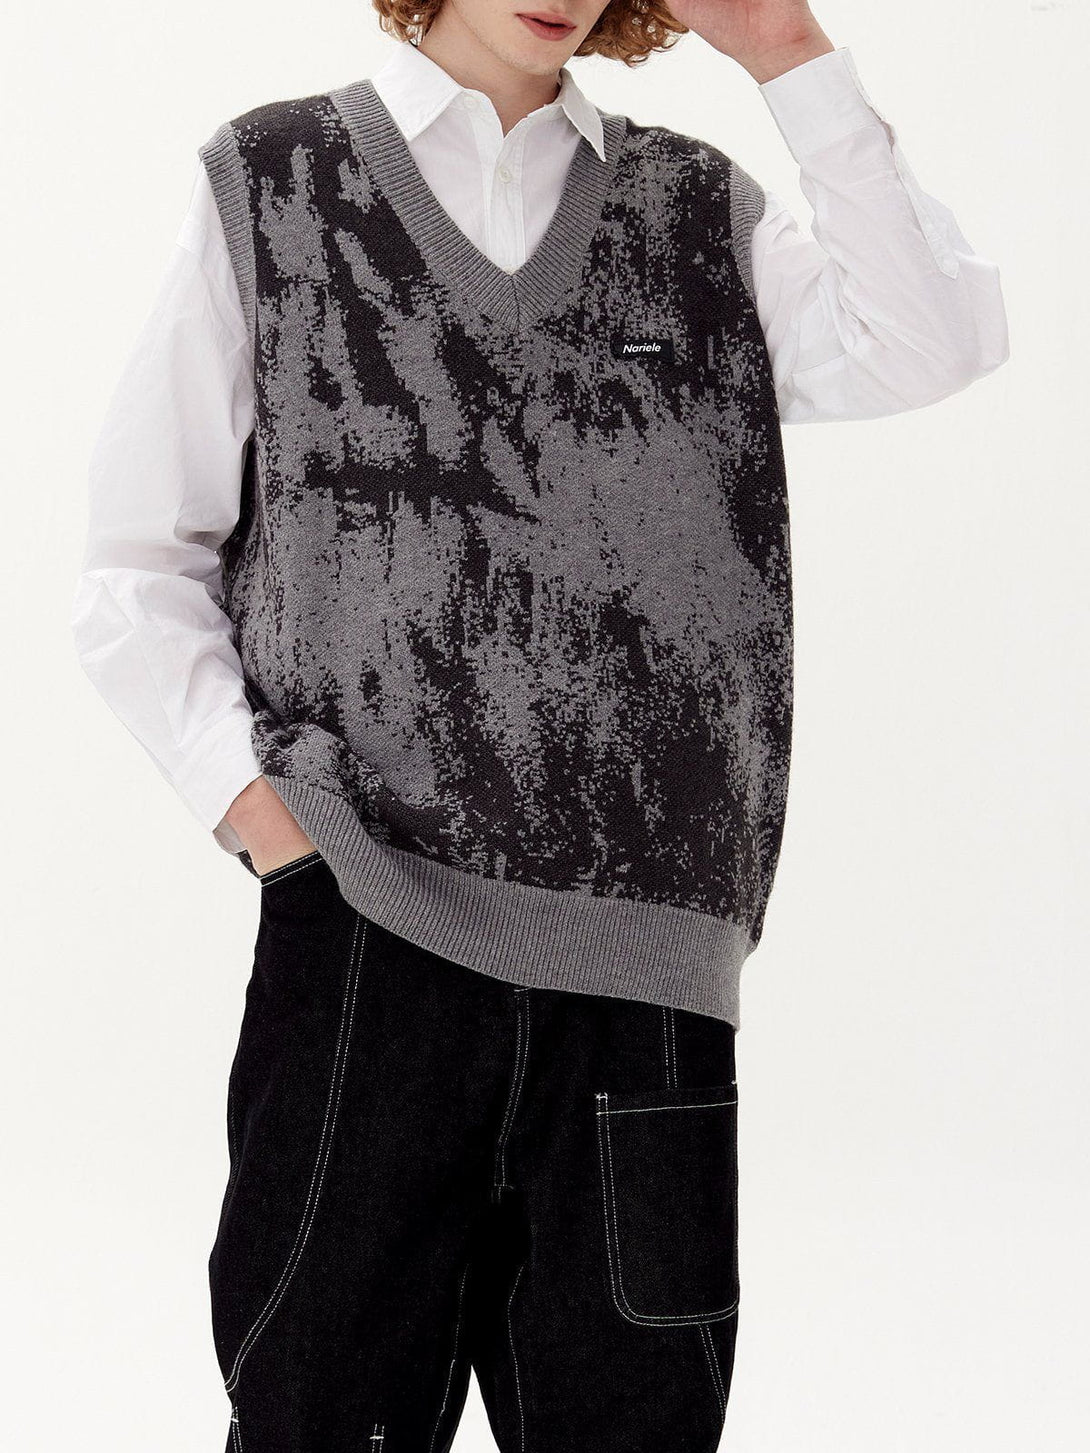 Levefly - Tie Dye Jacquard Sweater Vest - Streetwear Fashion - levefly.com